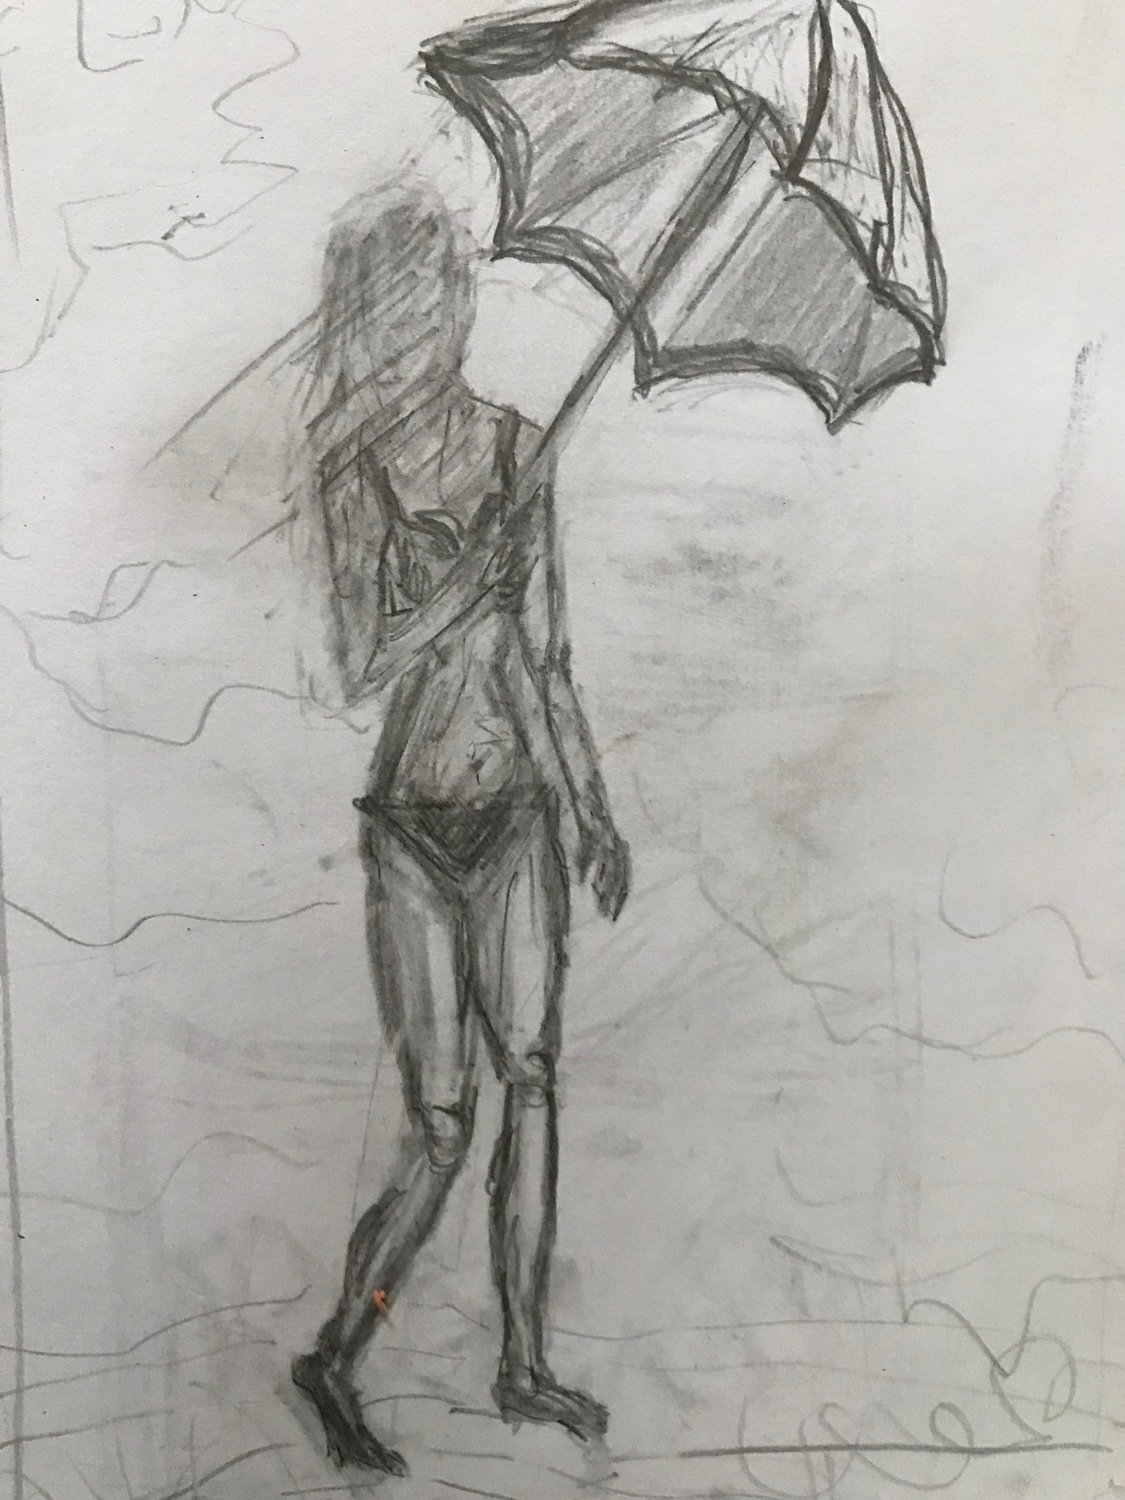 Coffee and A Sketch: Monet's Umbrella